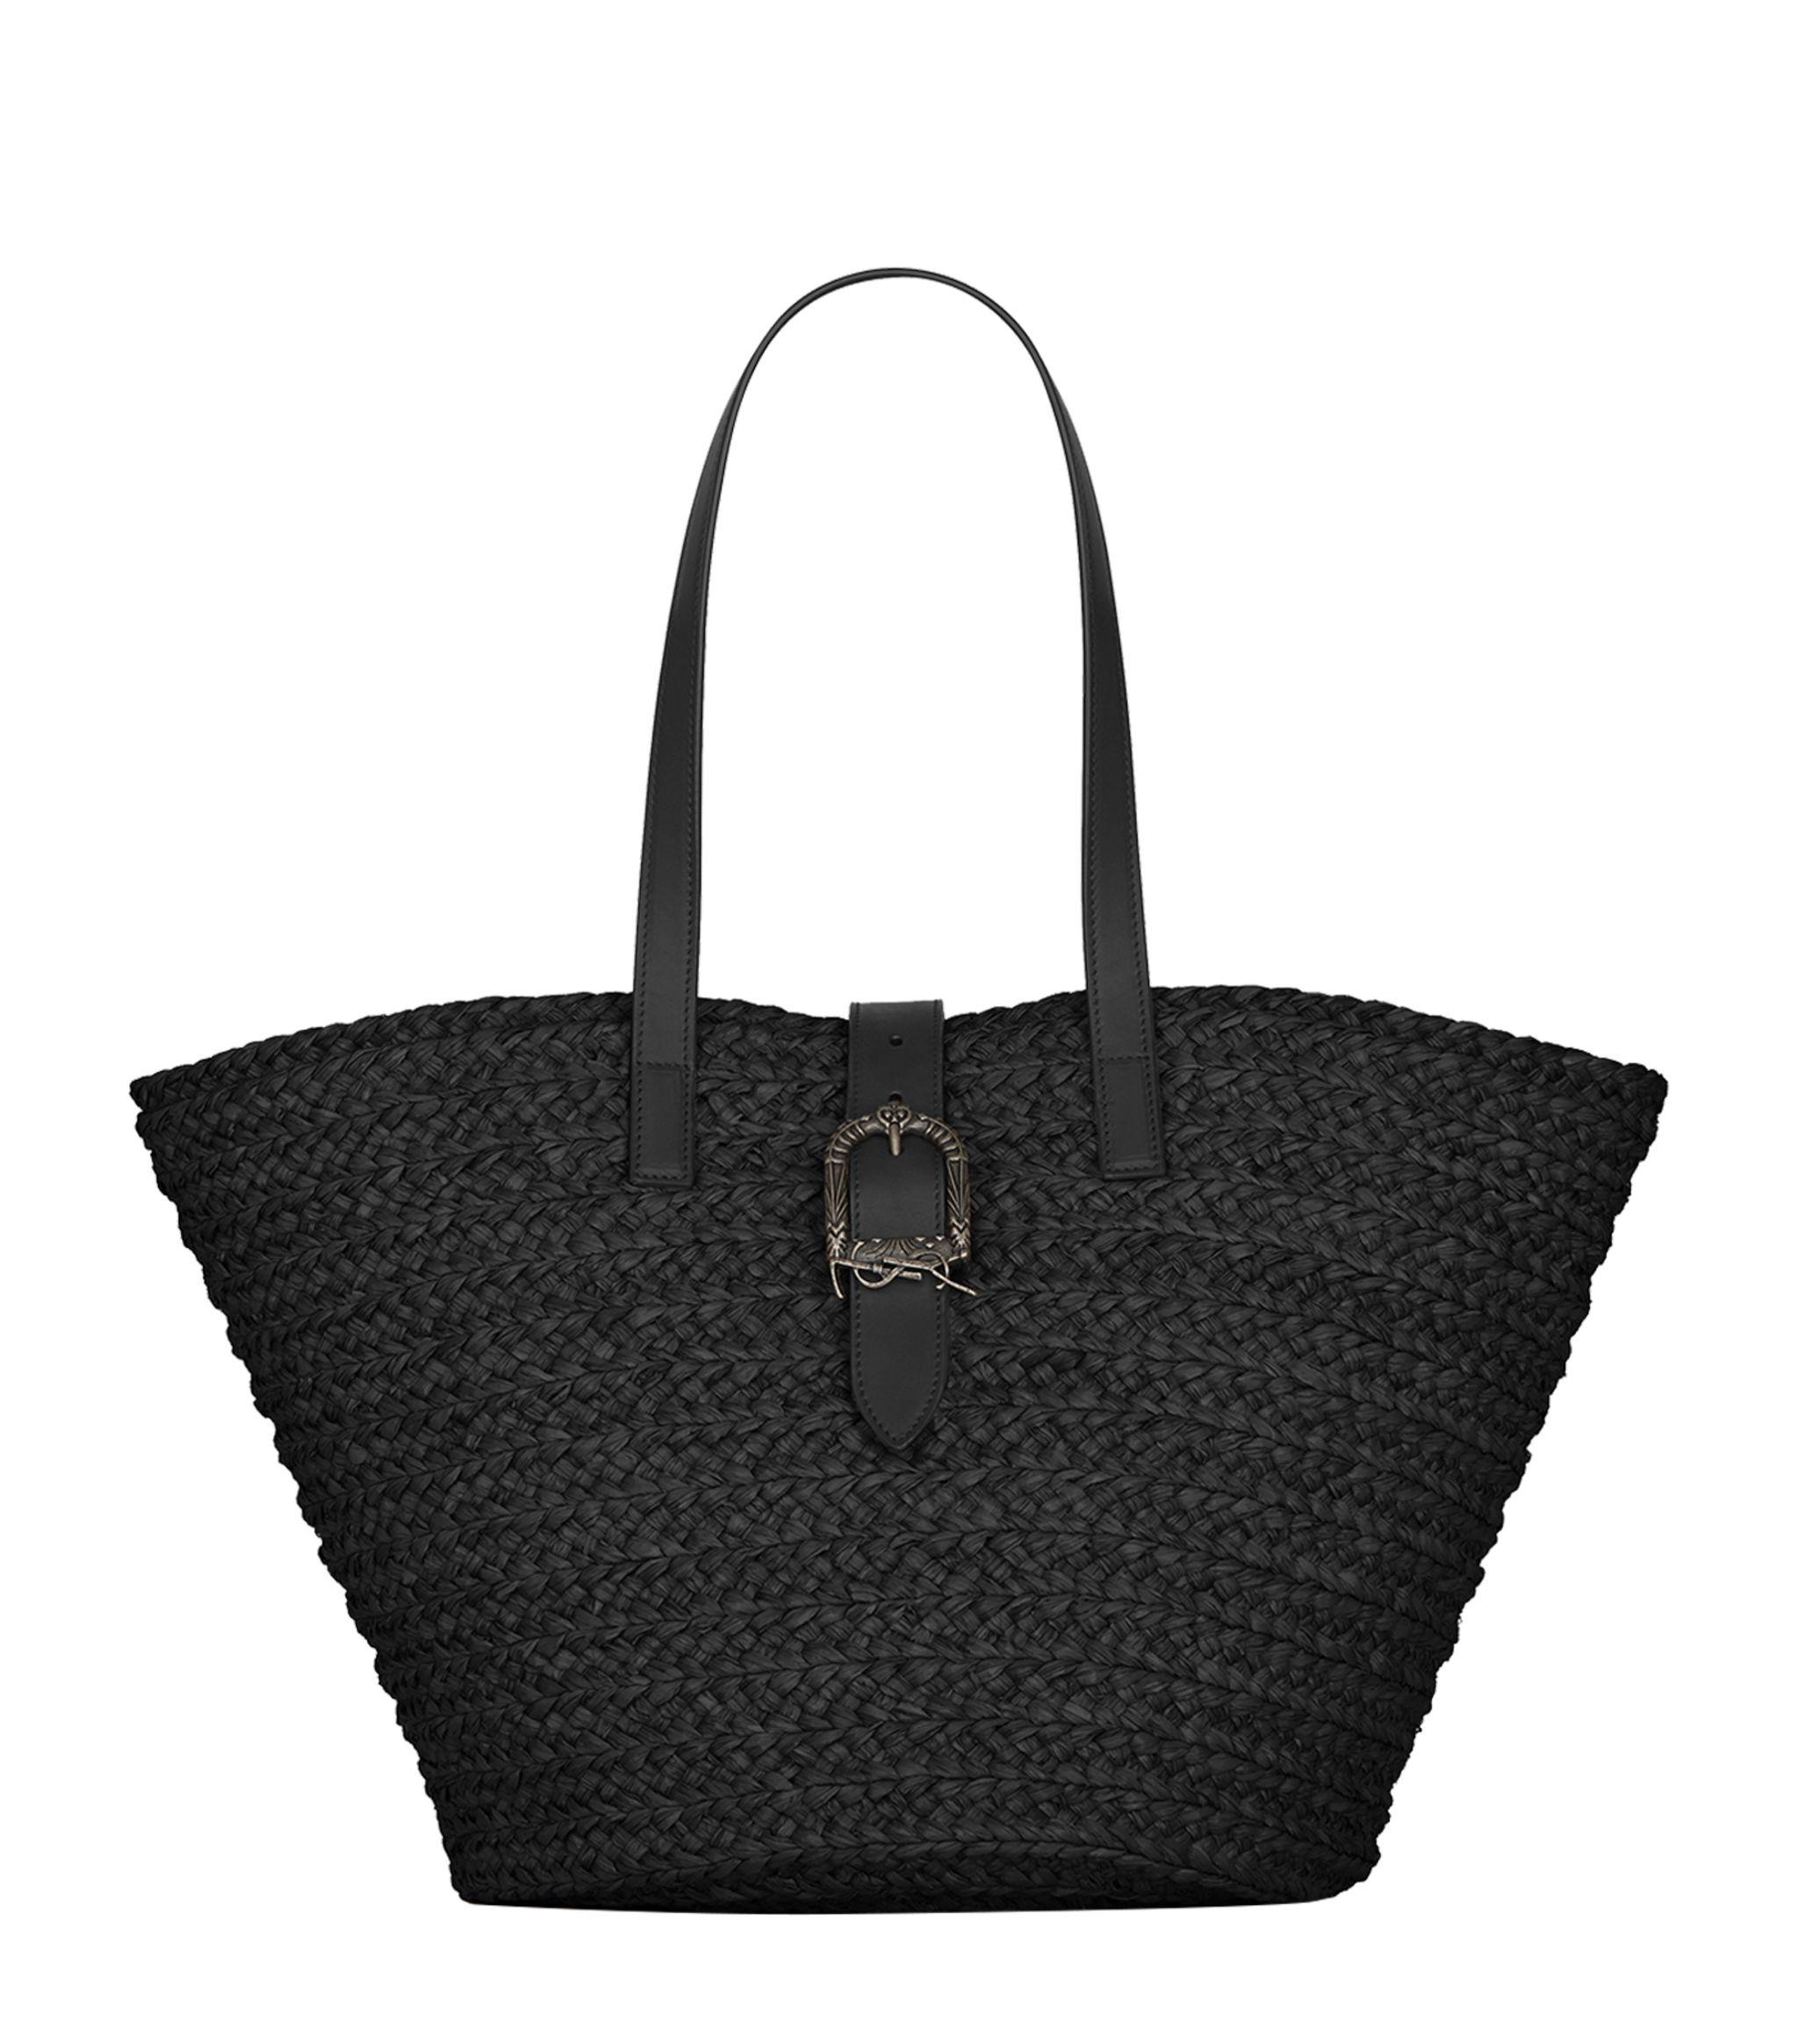 Saint Laurent Panier Tote Bag in Black - Save 15% - Lyst